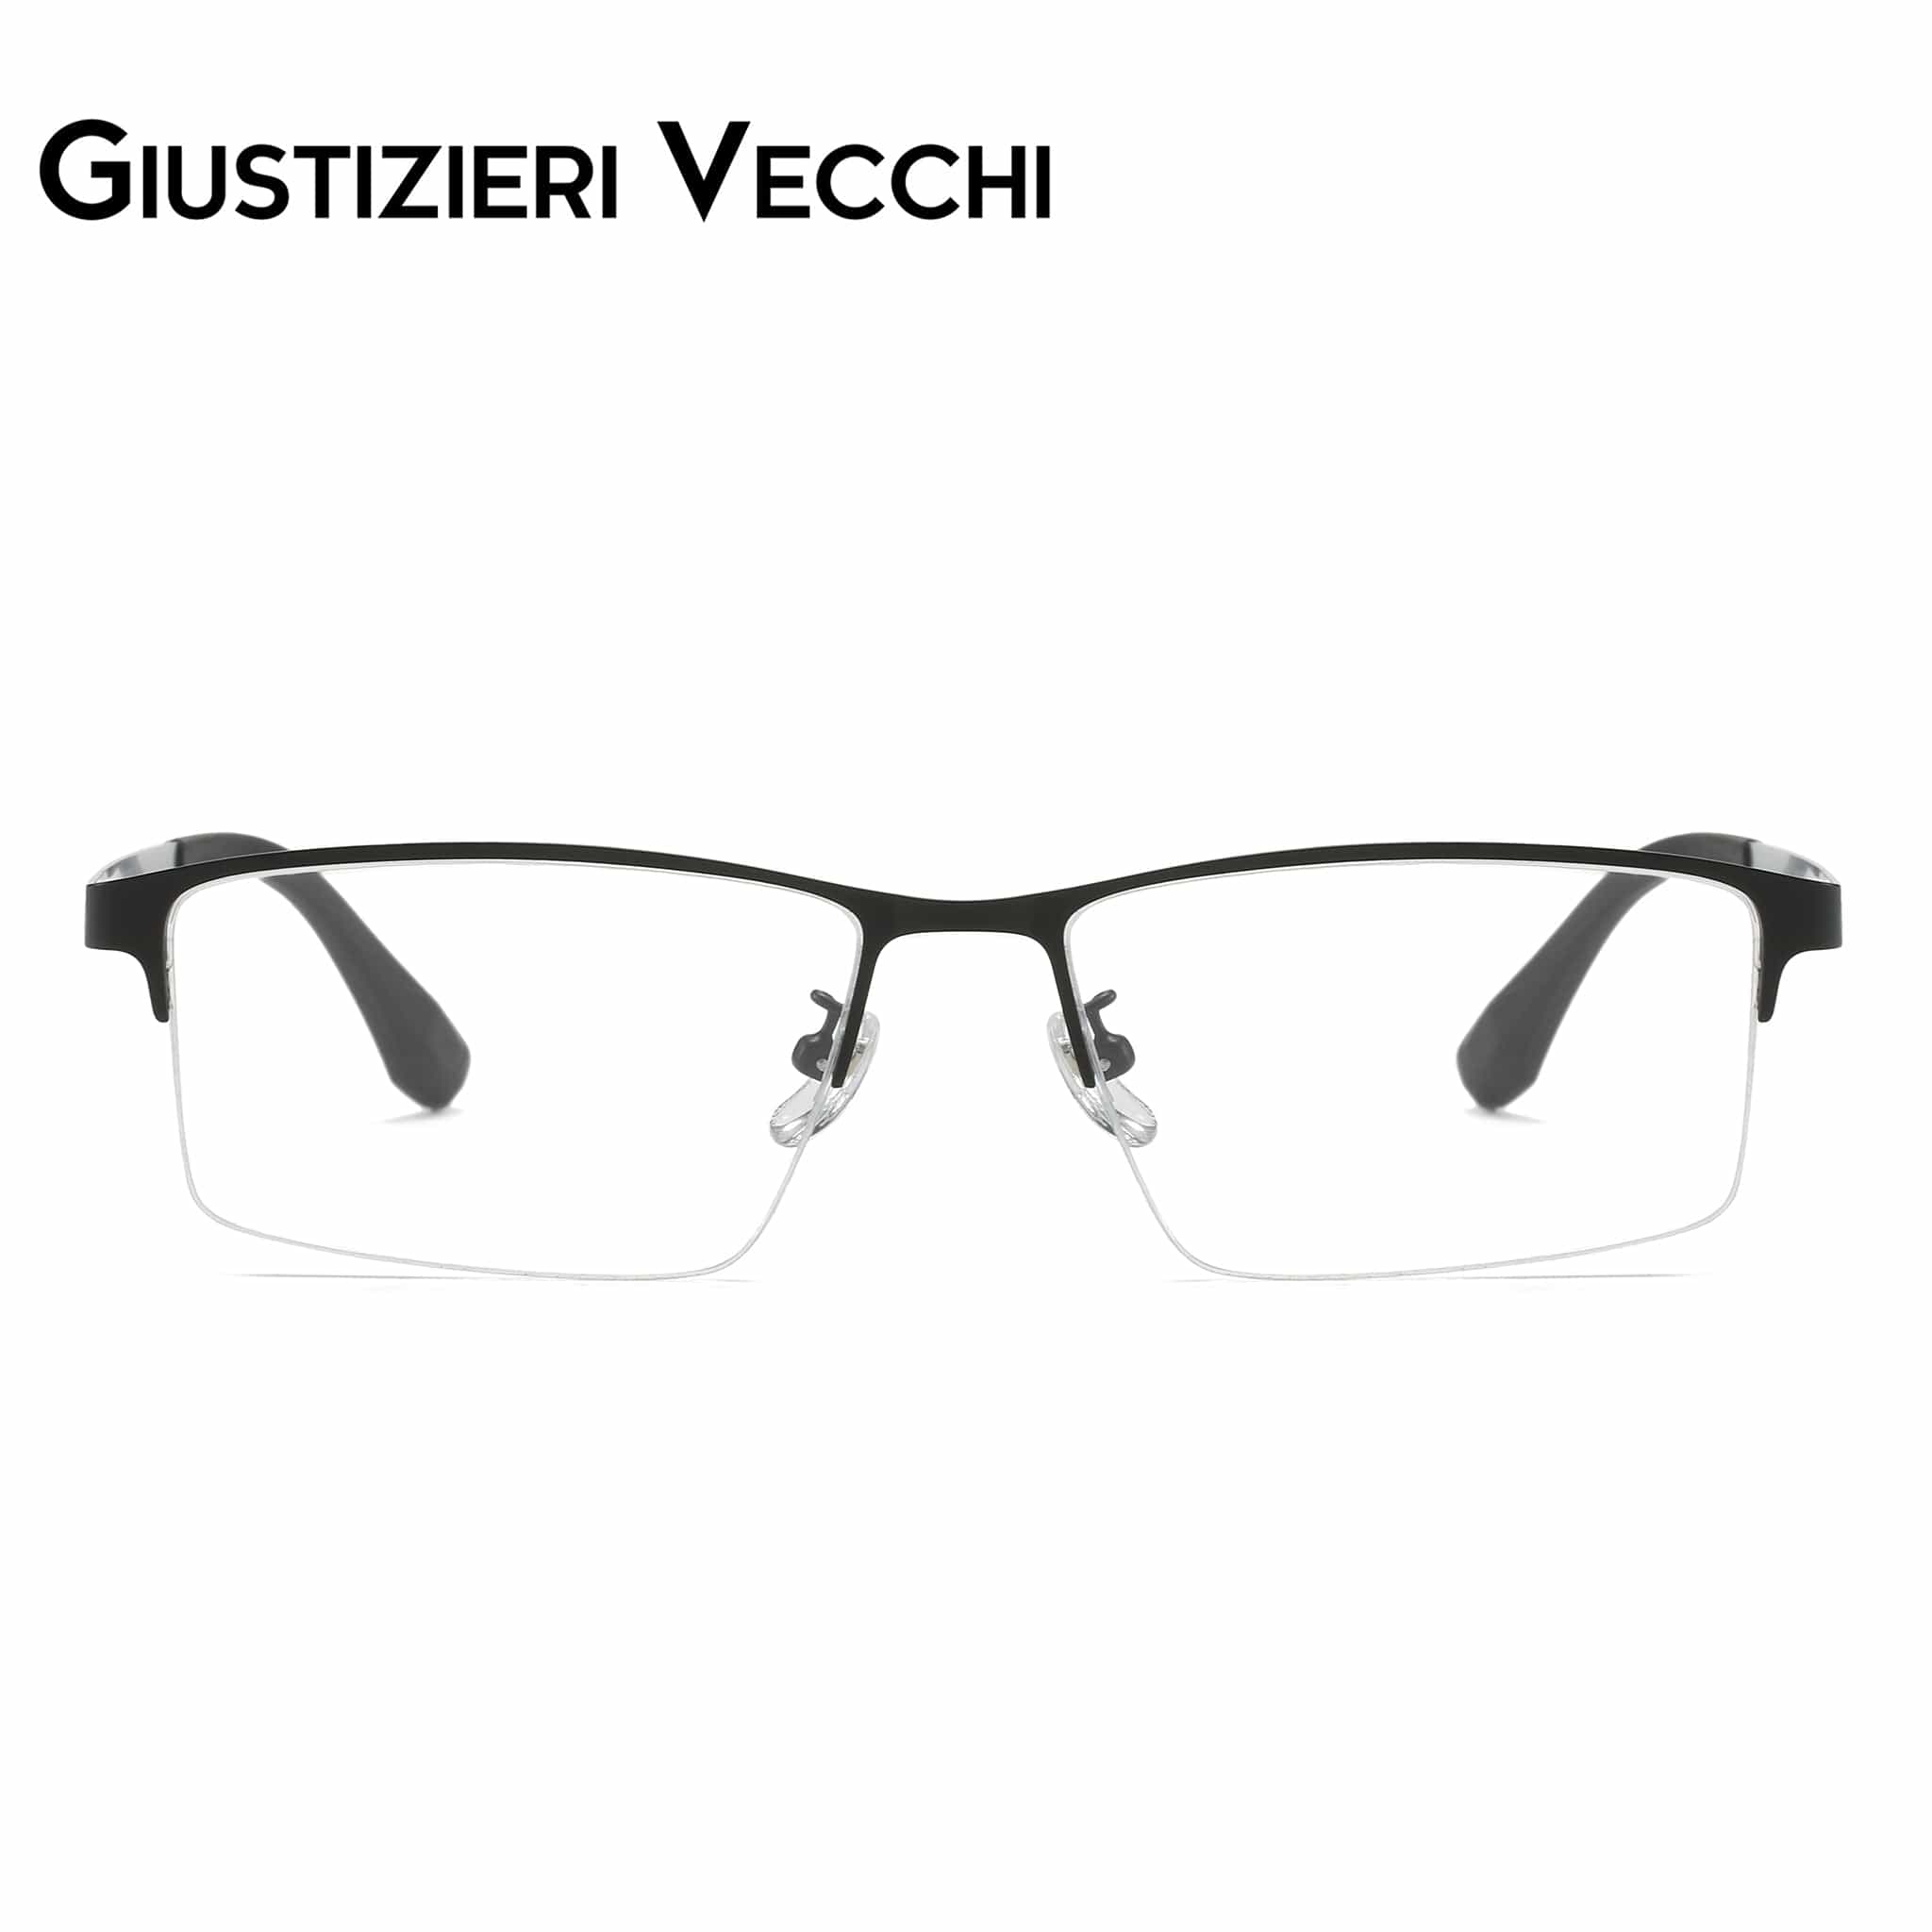 GIUSTIZIERI VECCHI Eyeglasses Black / Large FireFlow Uno